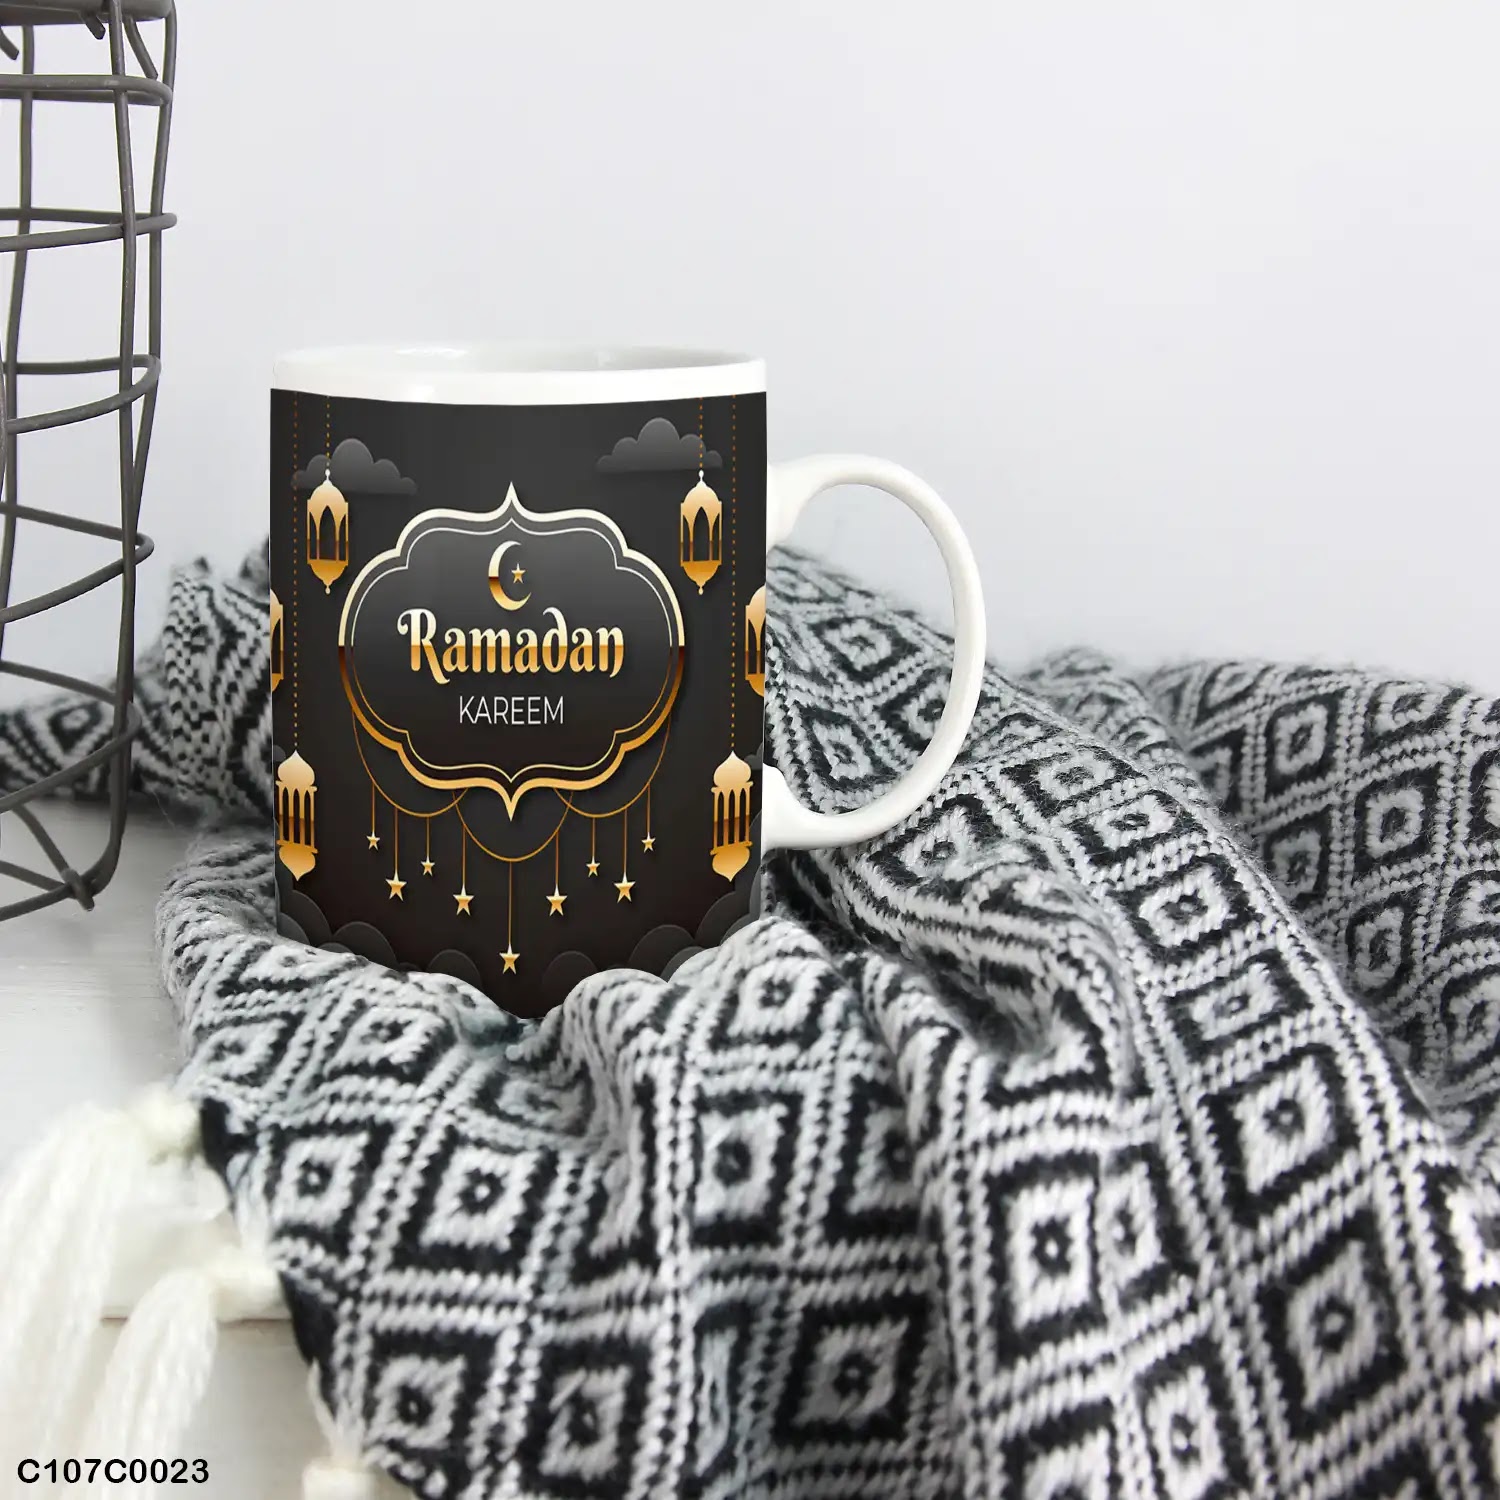 A black mug (cup) printed with "Ramadan Kareem"